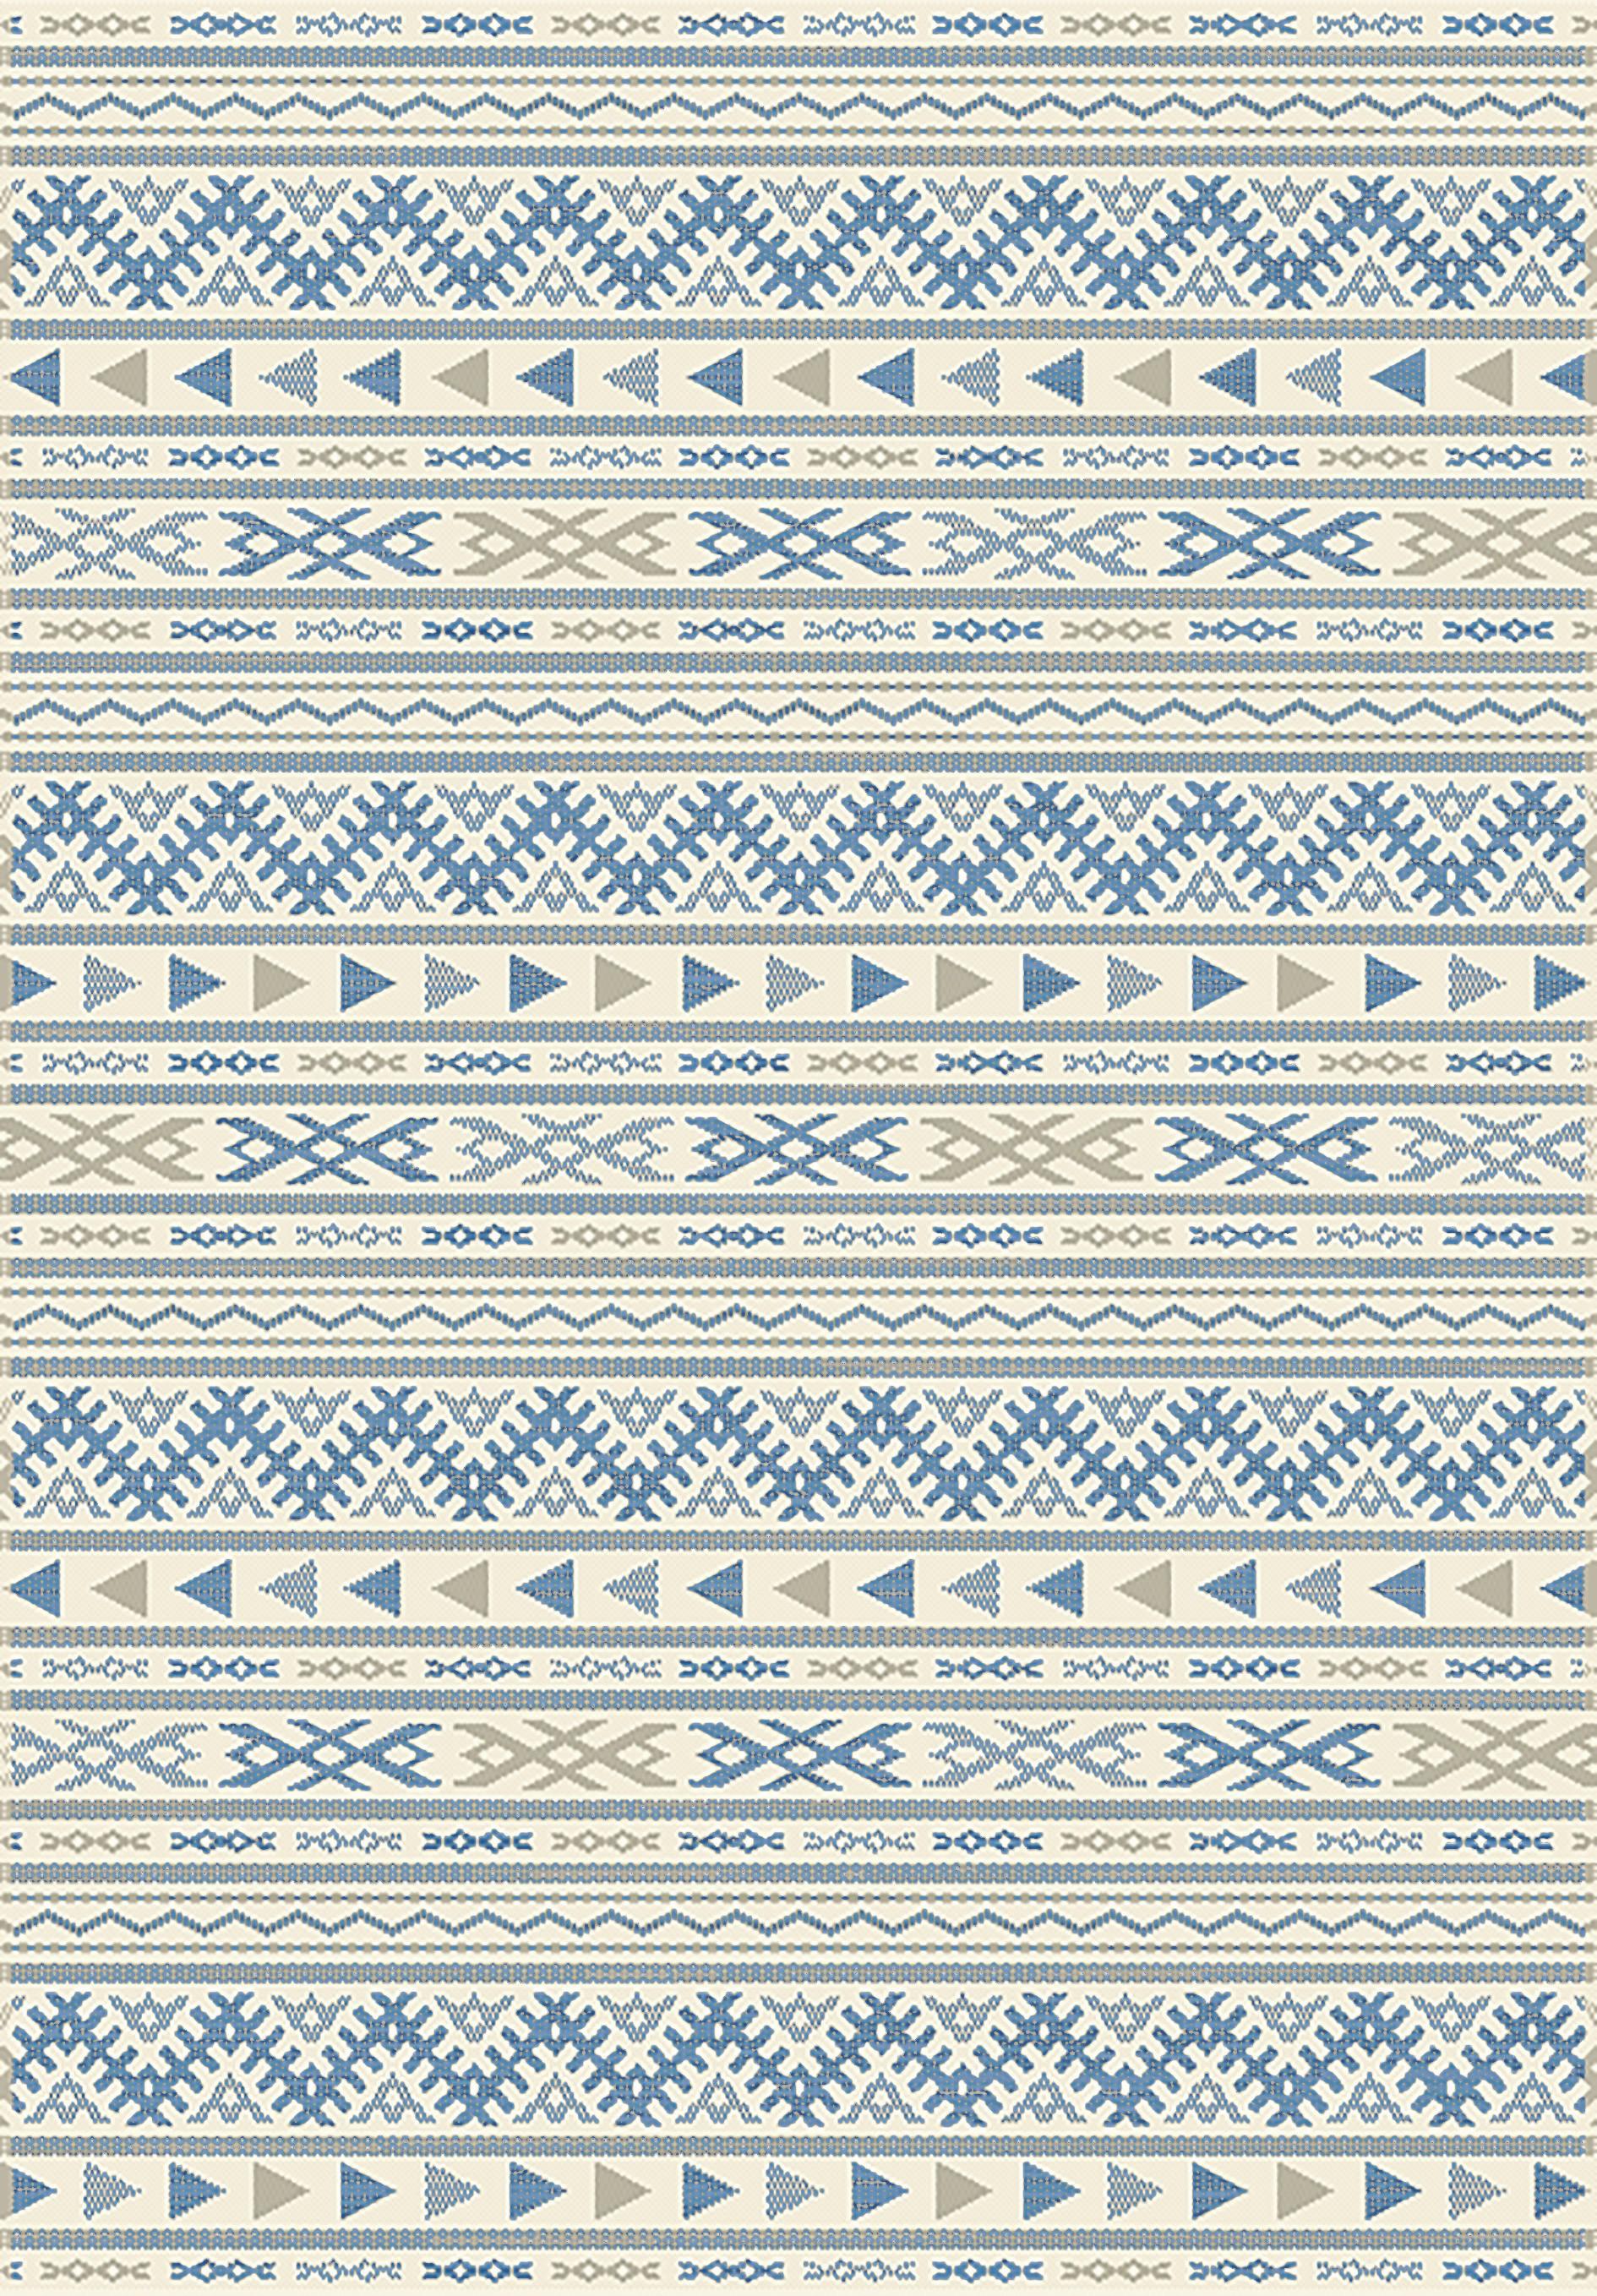 Flachwebeteppich Kelim 3 in Blau/Natur ca. 160x230cm - Blau/Naturfarben, MODERN, Textil (160/230cm) - Modern Living